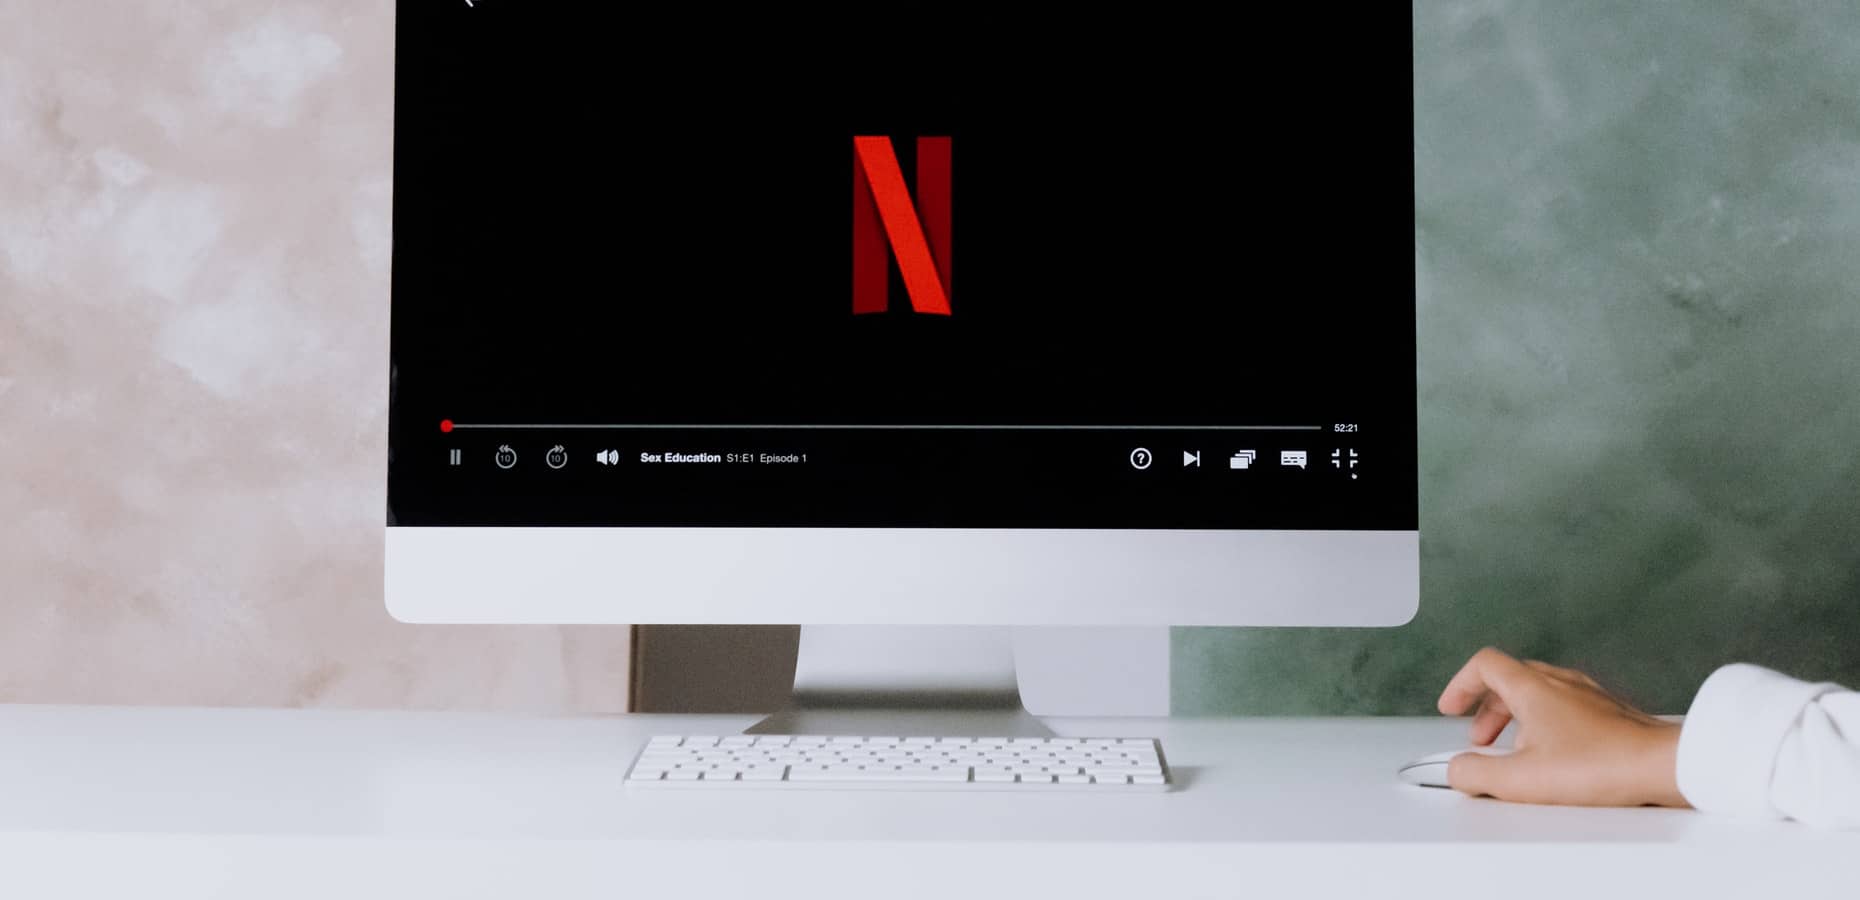 Netflix Hiring Process: Getting a Job at Netflix